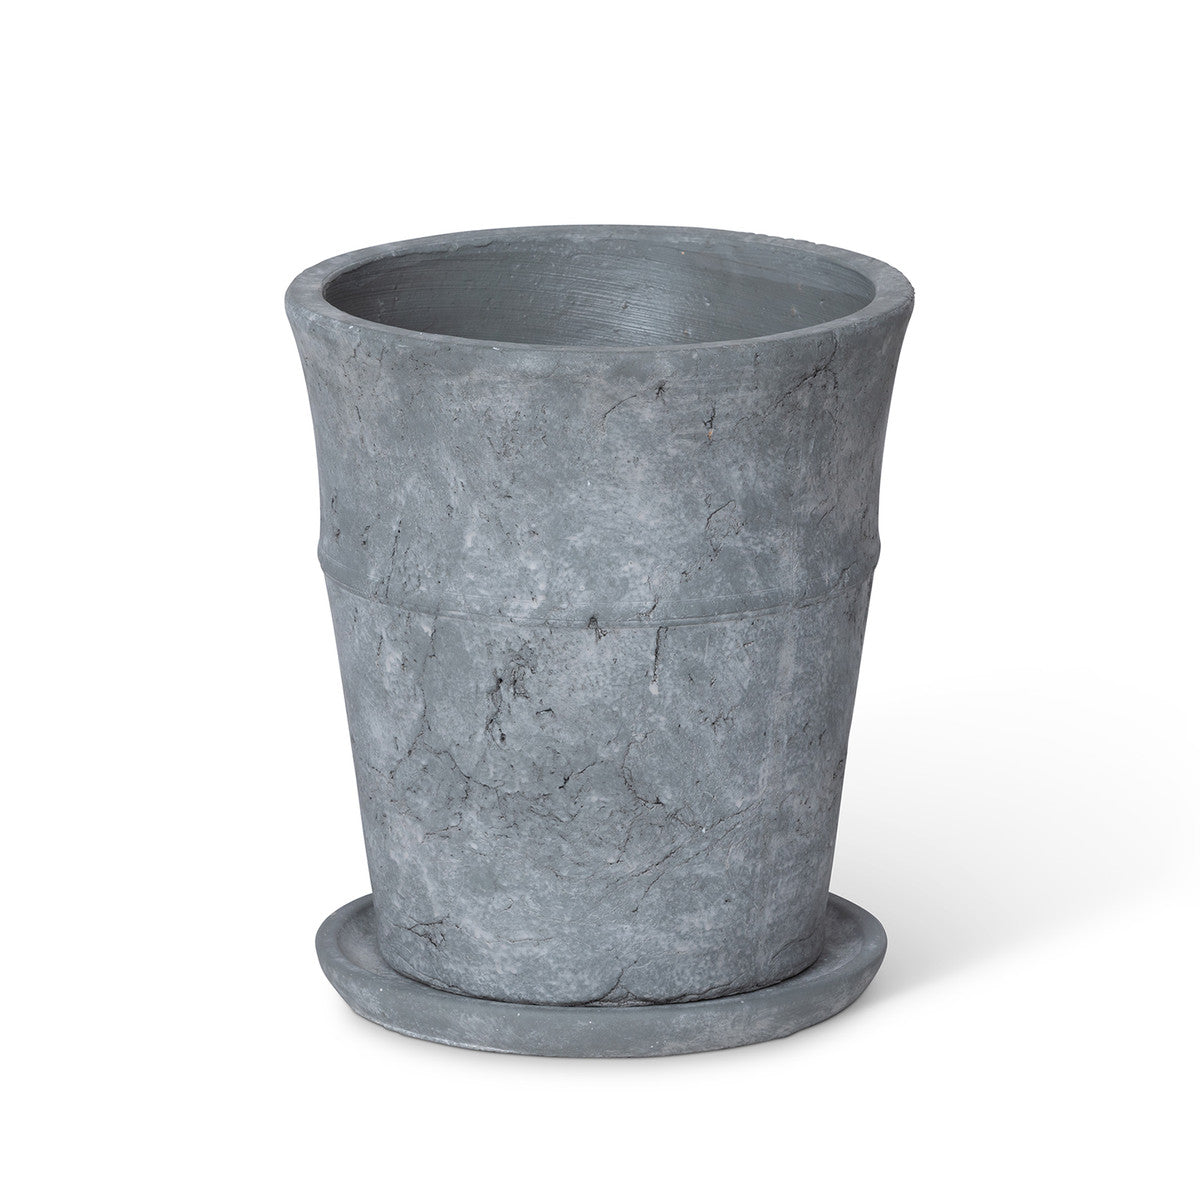 Meyer Cement Garden Pot w/ Tray - 8.5"